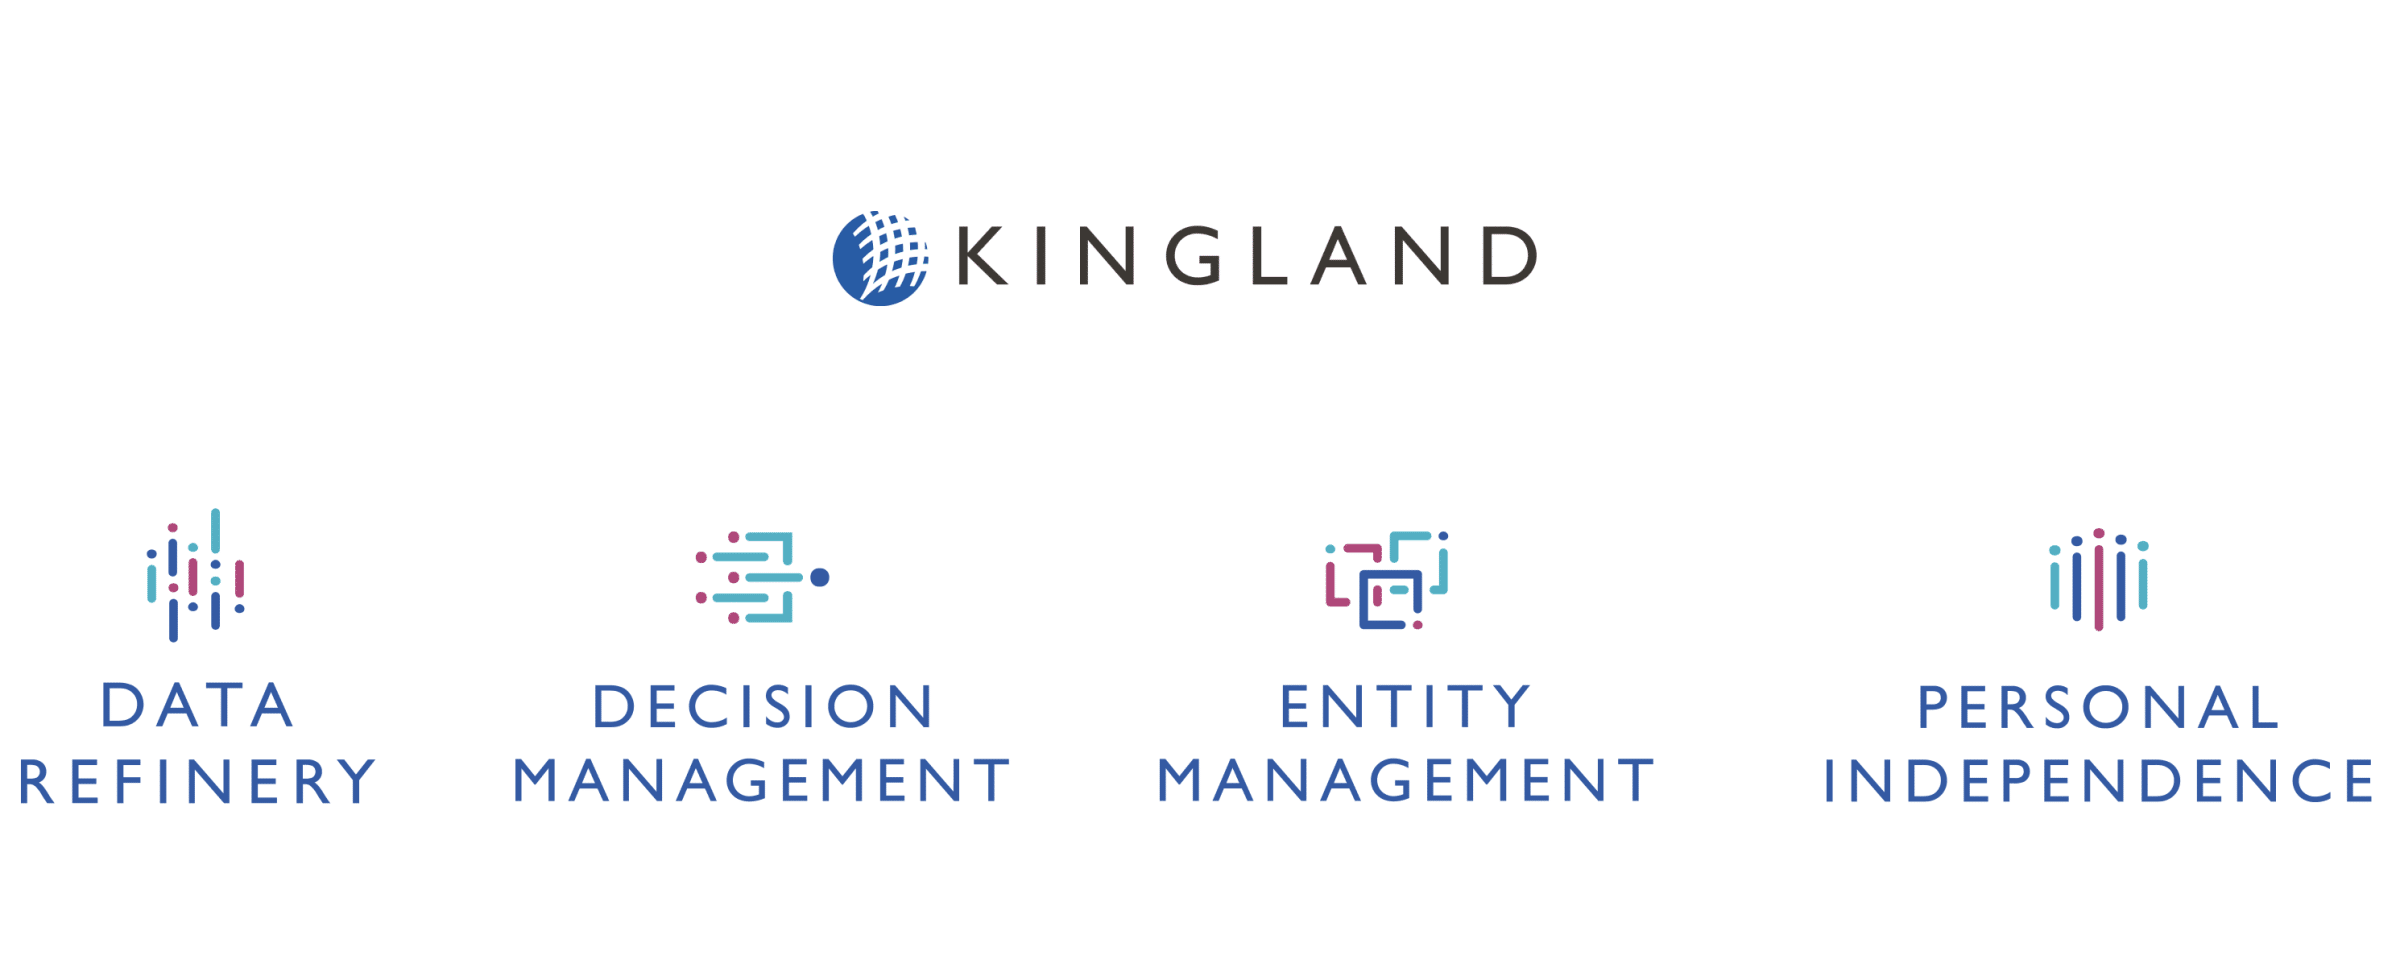 KIngland logo and sub-brands